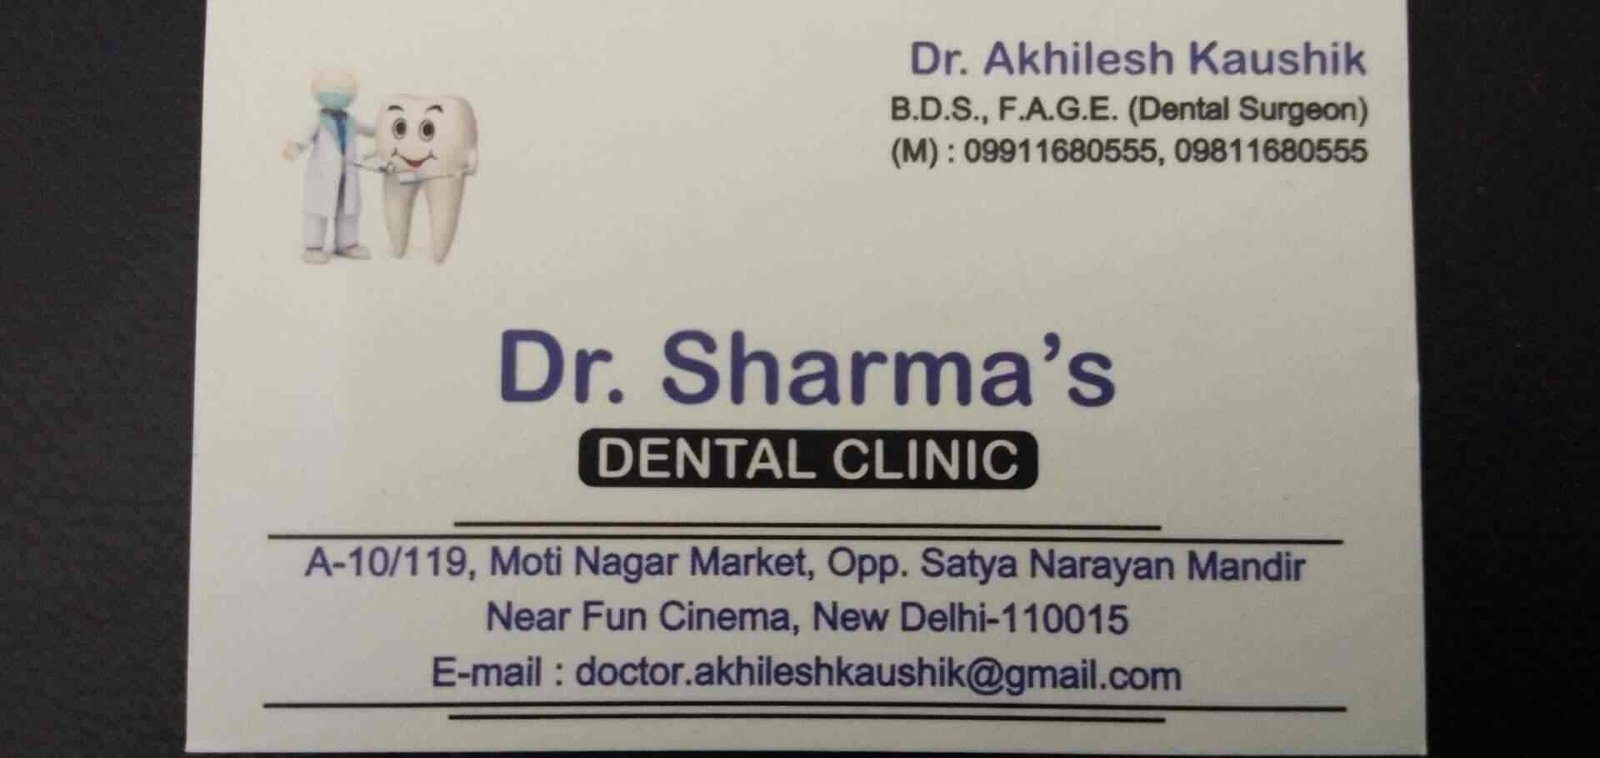 Dr. Sharma's